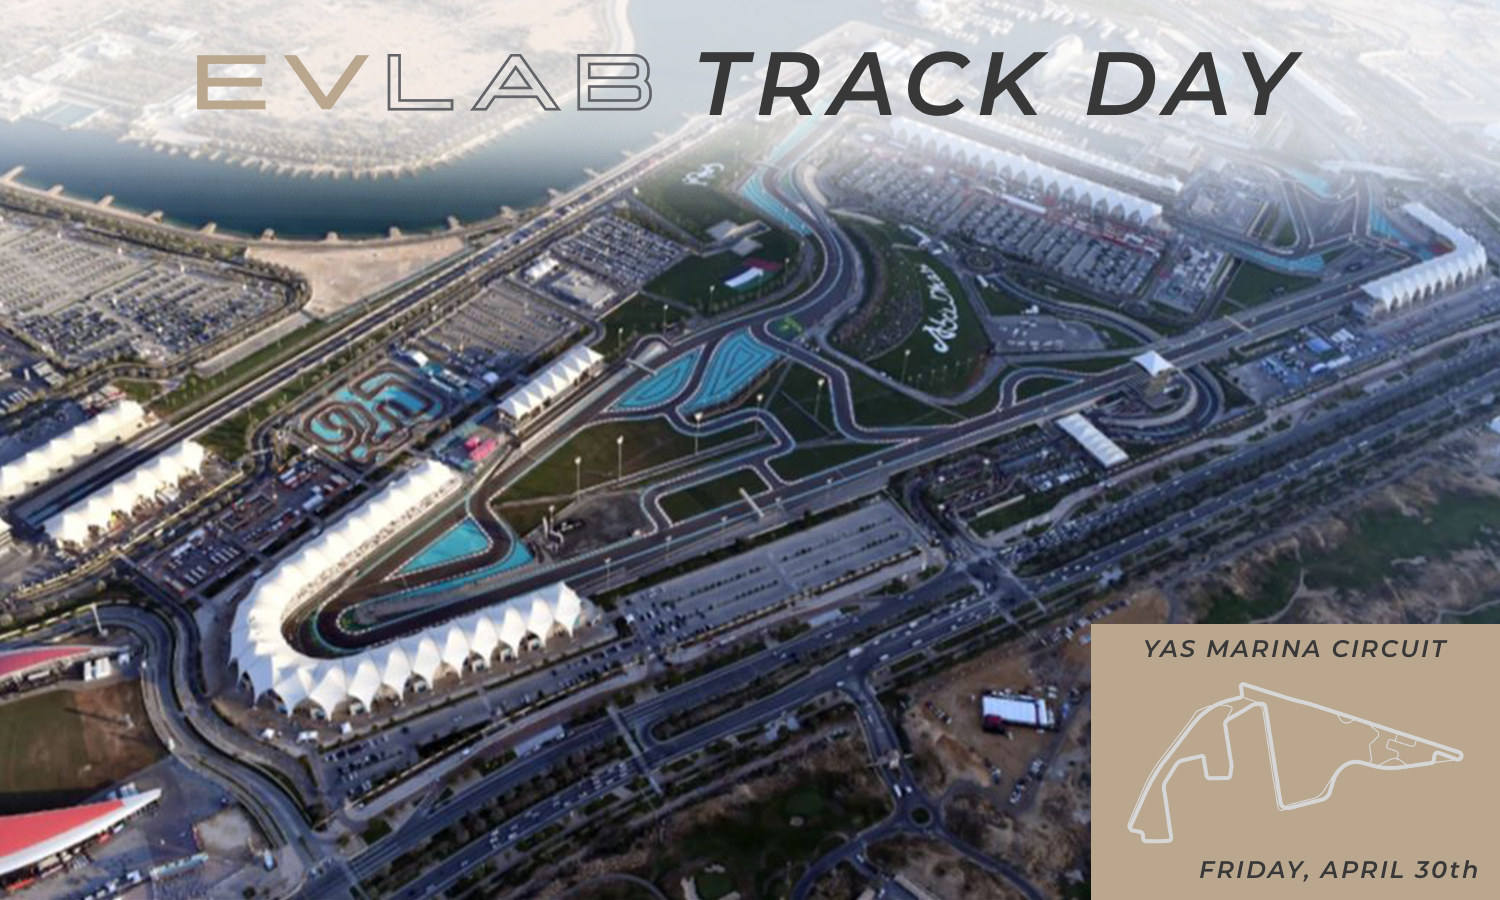 ev track day image